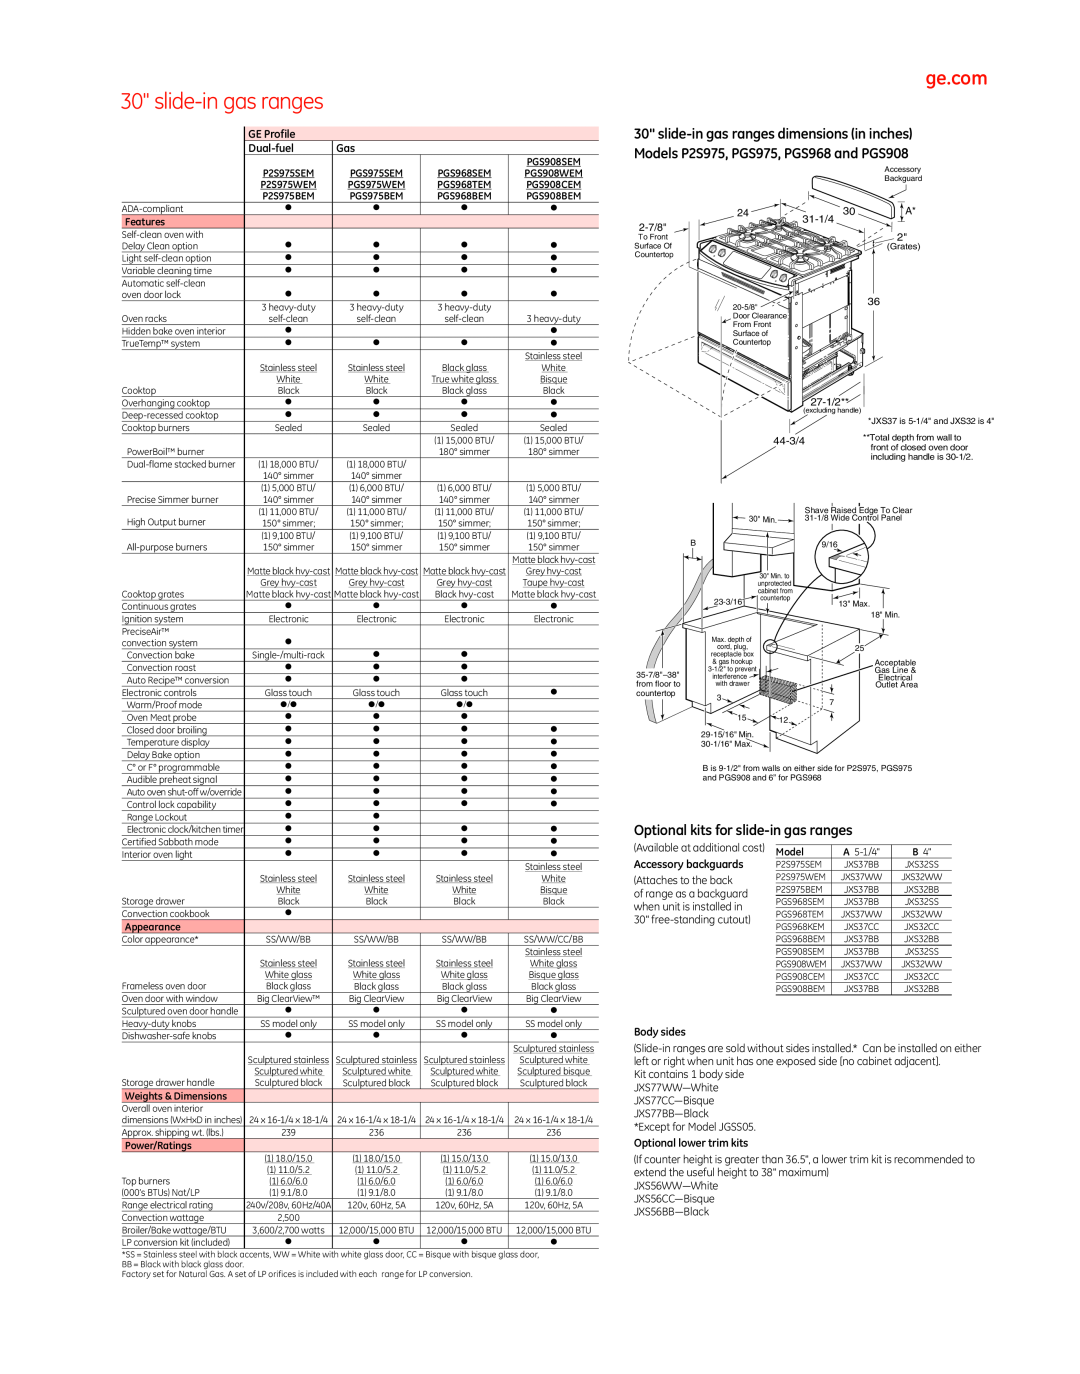 GE Monogram PGS975 manual ge.com, Optional kits for slide-in gas ranges 